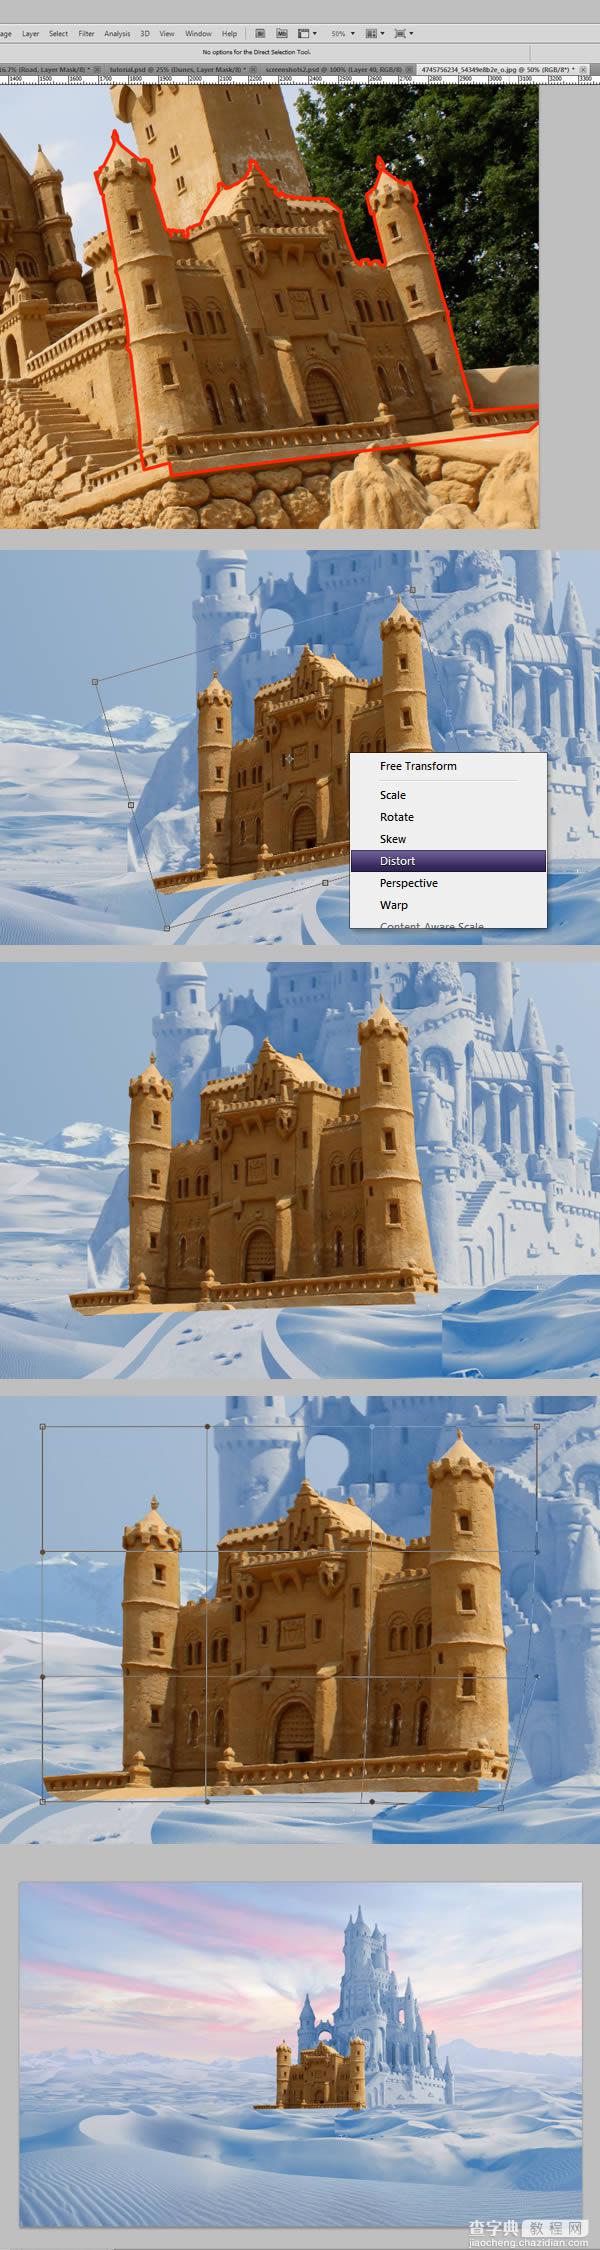 photoshop将荒漠场景打造出迪士尼风格的雪景图43